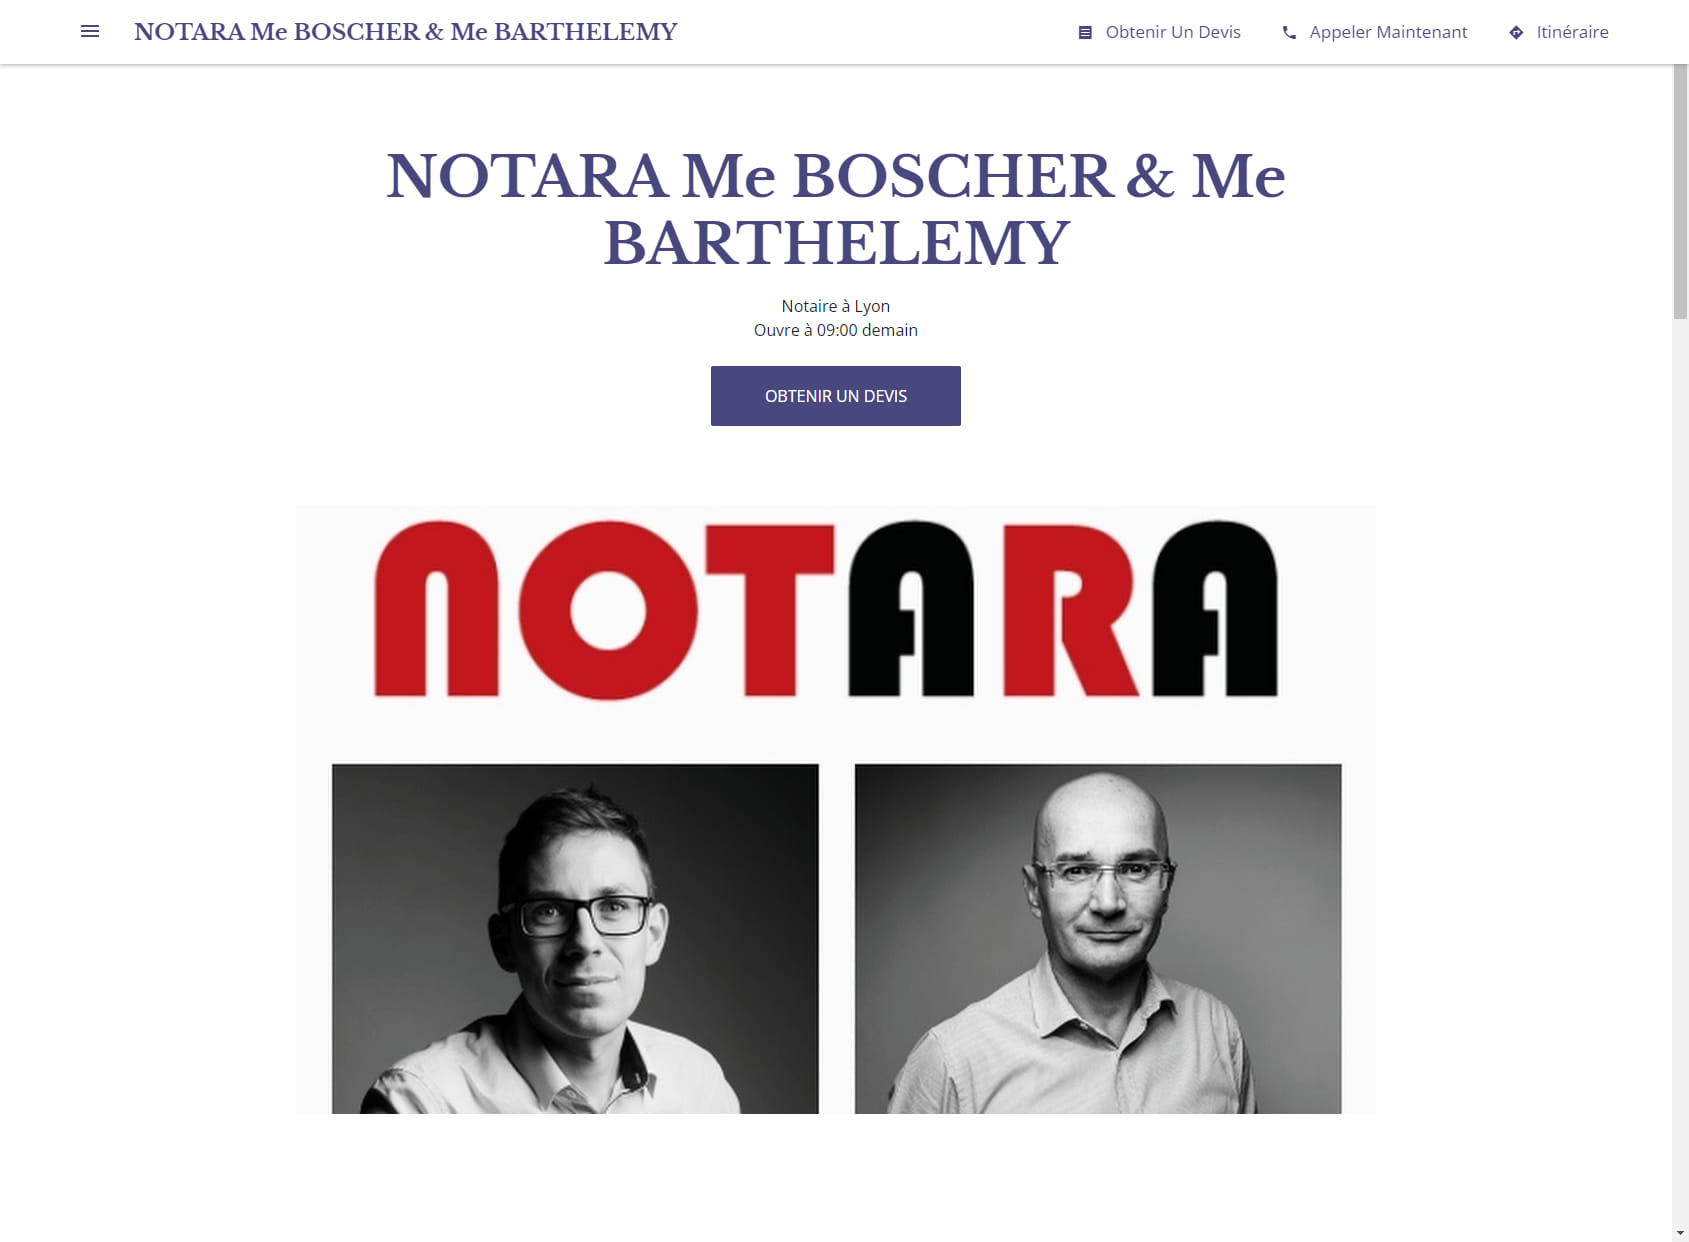 NOTARA Me BOSCHER & Me BARTHELEMY